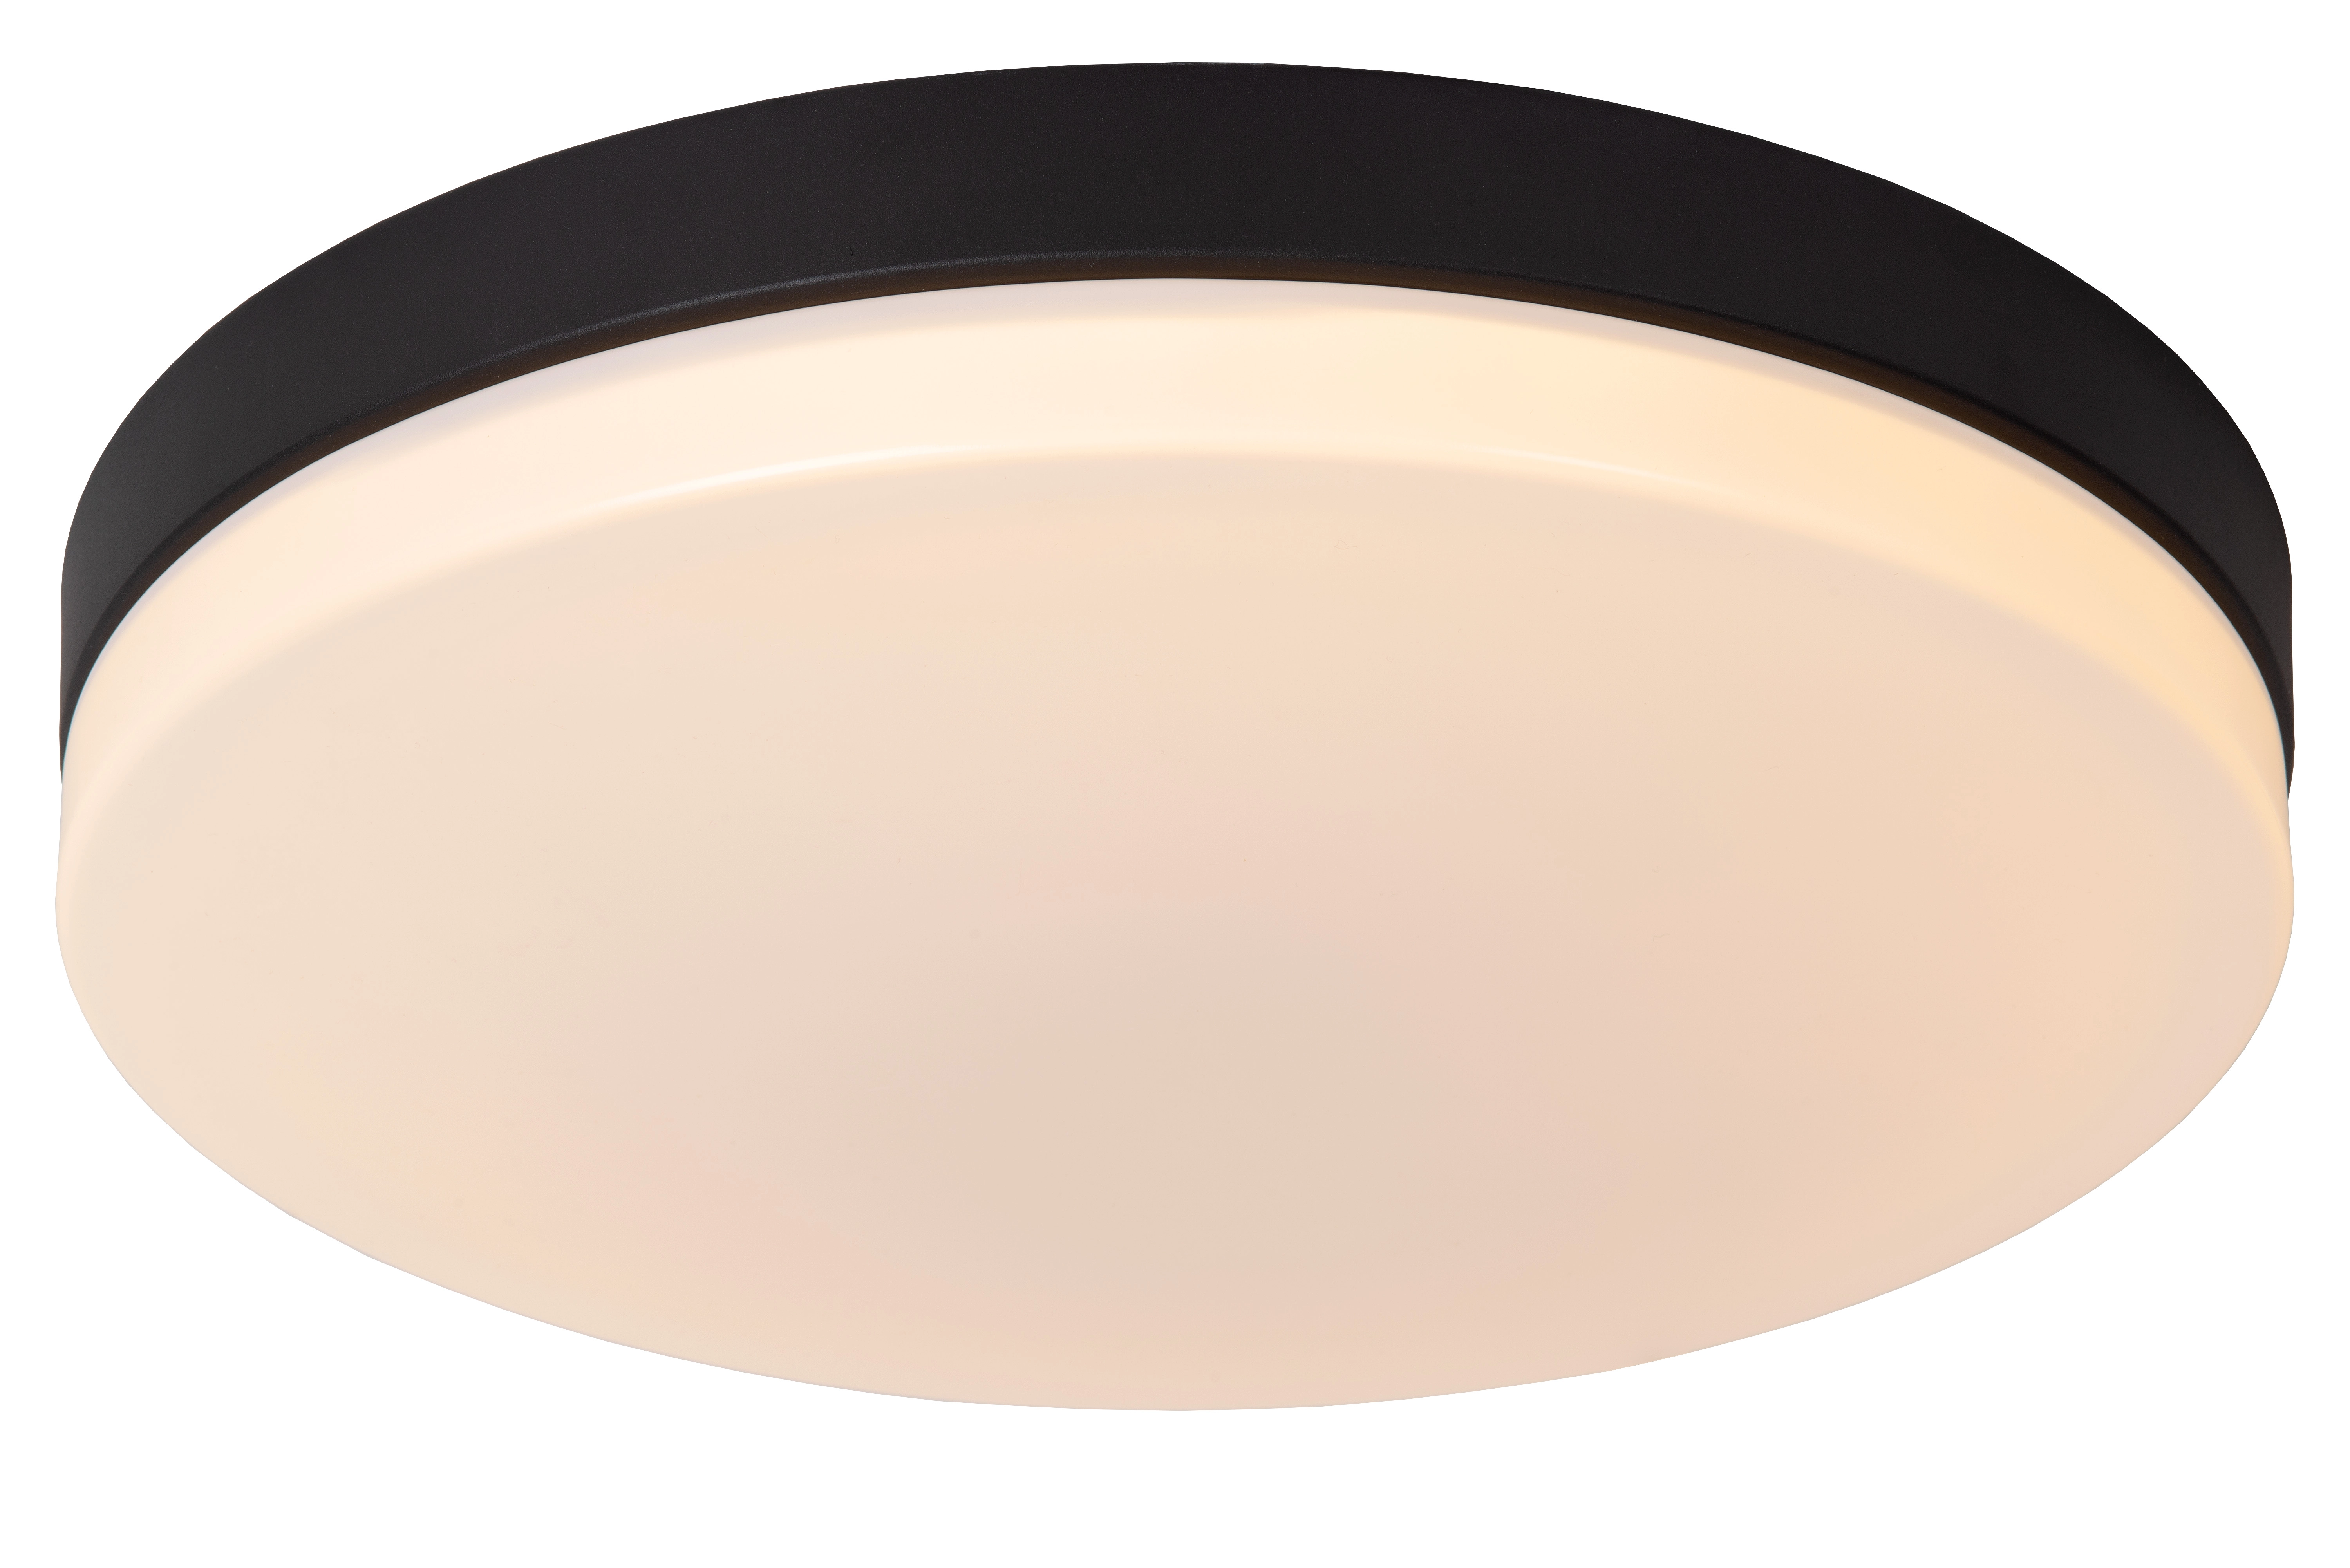 LU 79111/40/30 Lucide BISKIT - Flush ceiling light Bathroom - Ø 40 cm - LED - 1x36W 2700K - IP44 - Black